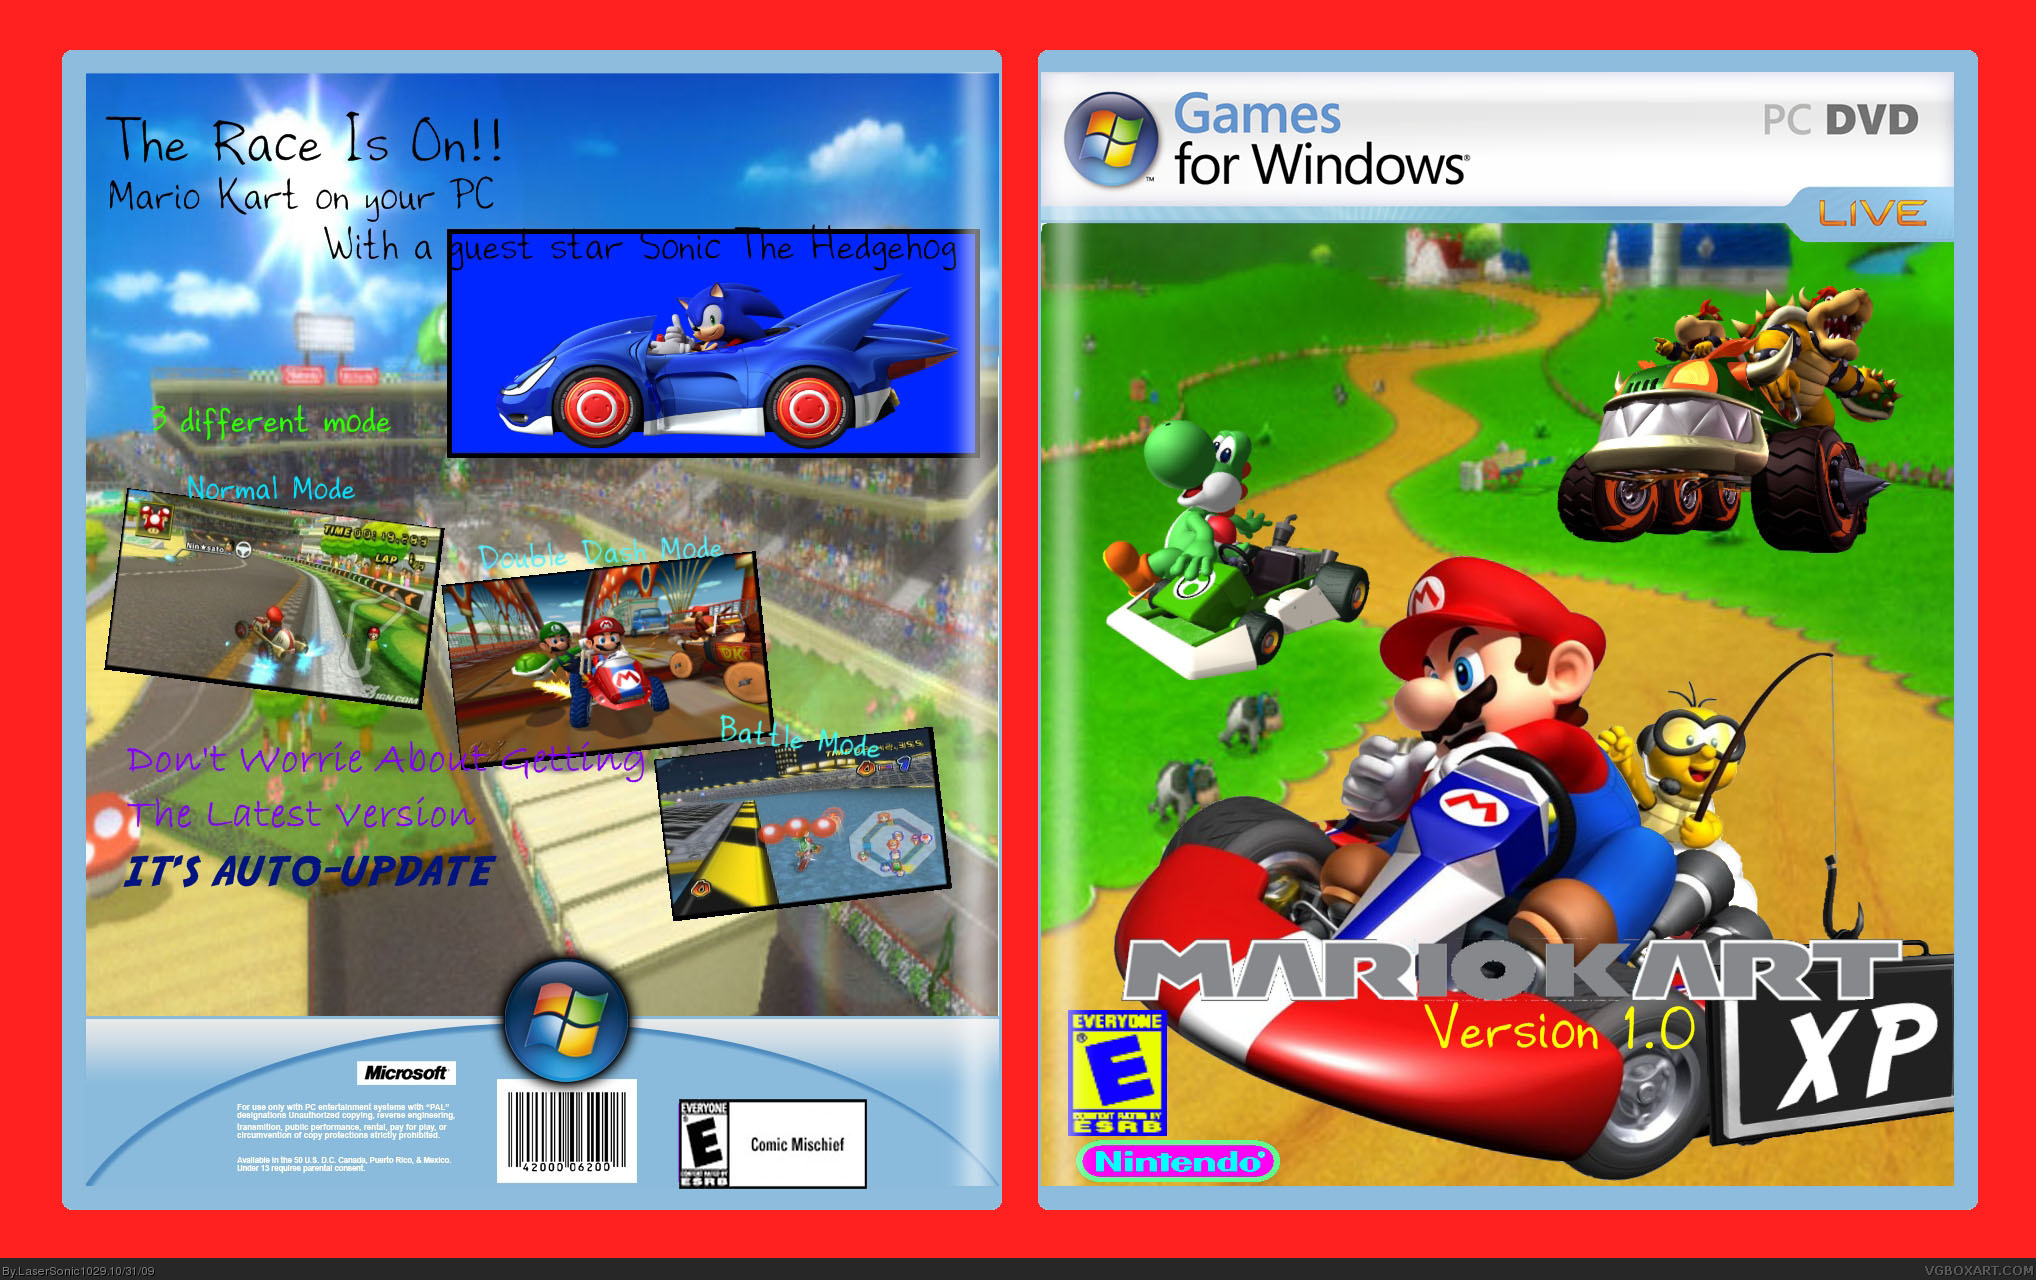 Mario Kart XP box cover